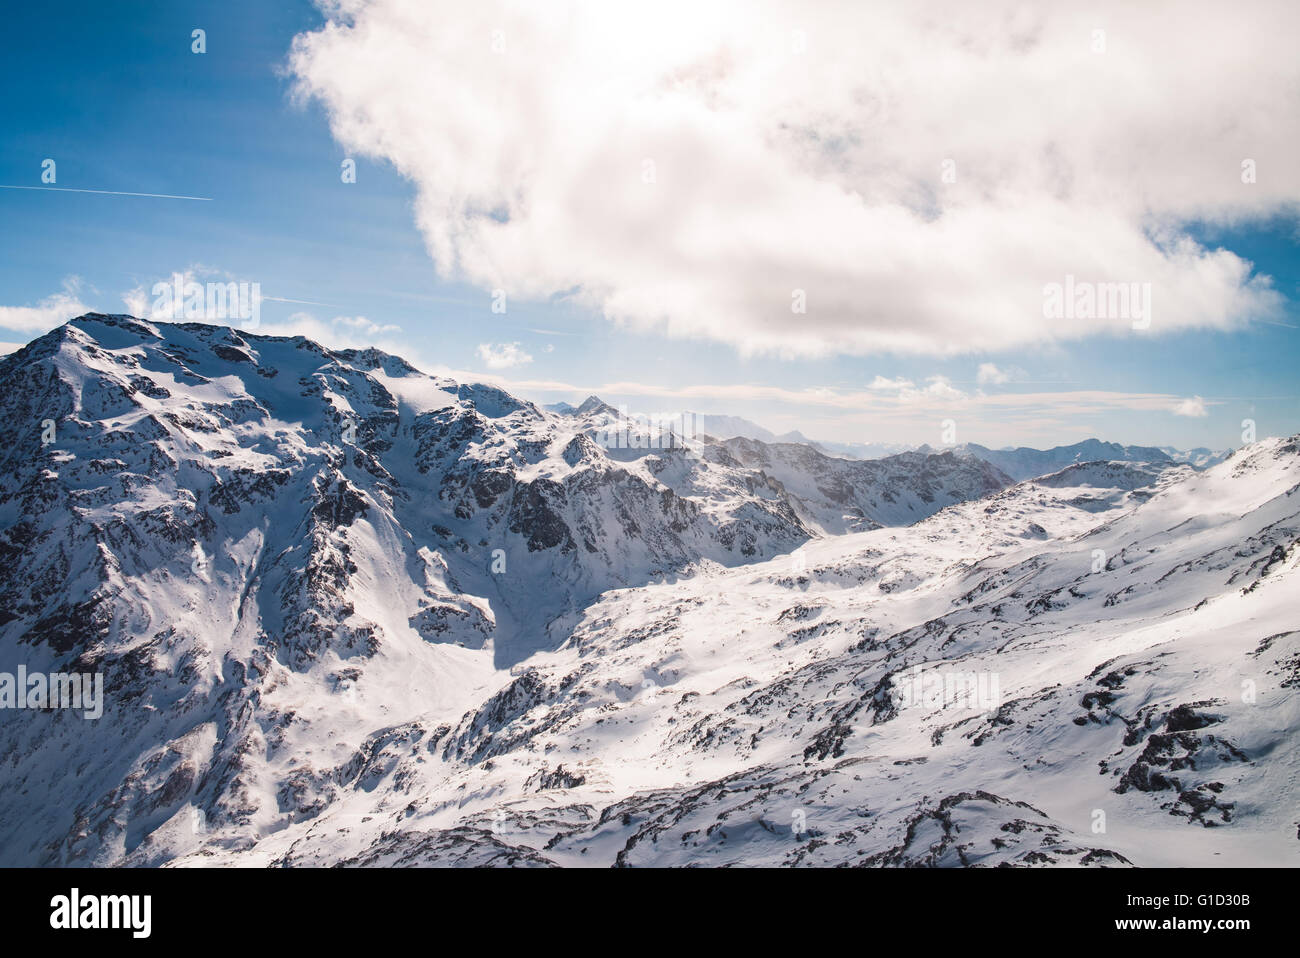 Snowy mountain landscape in winter Stock Photo